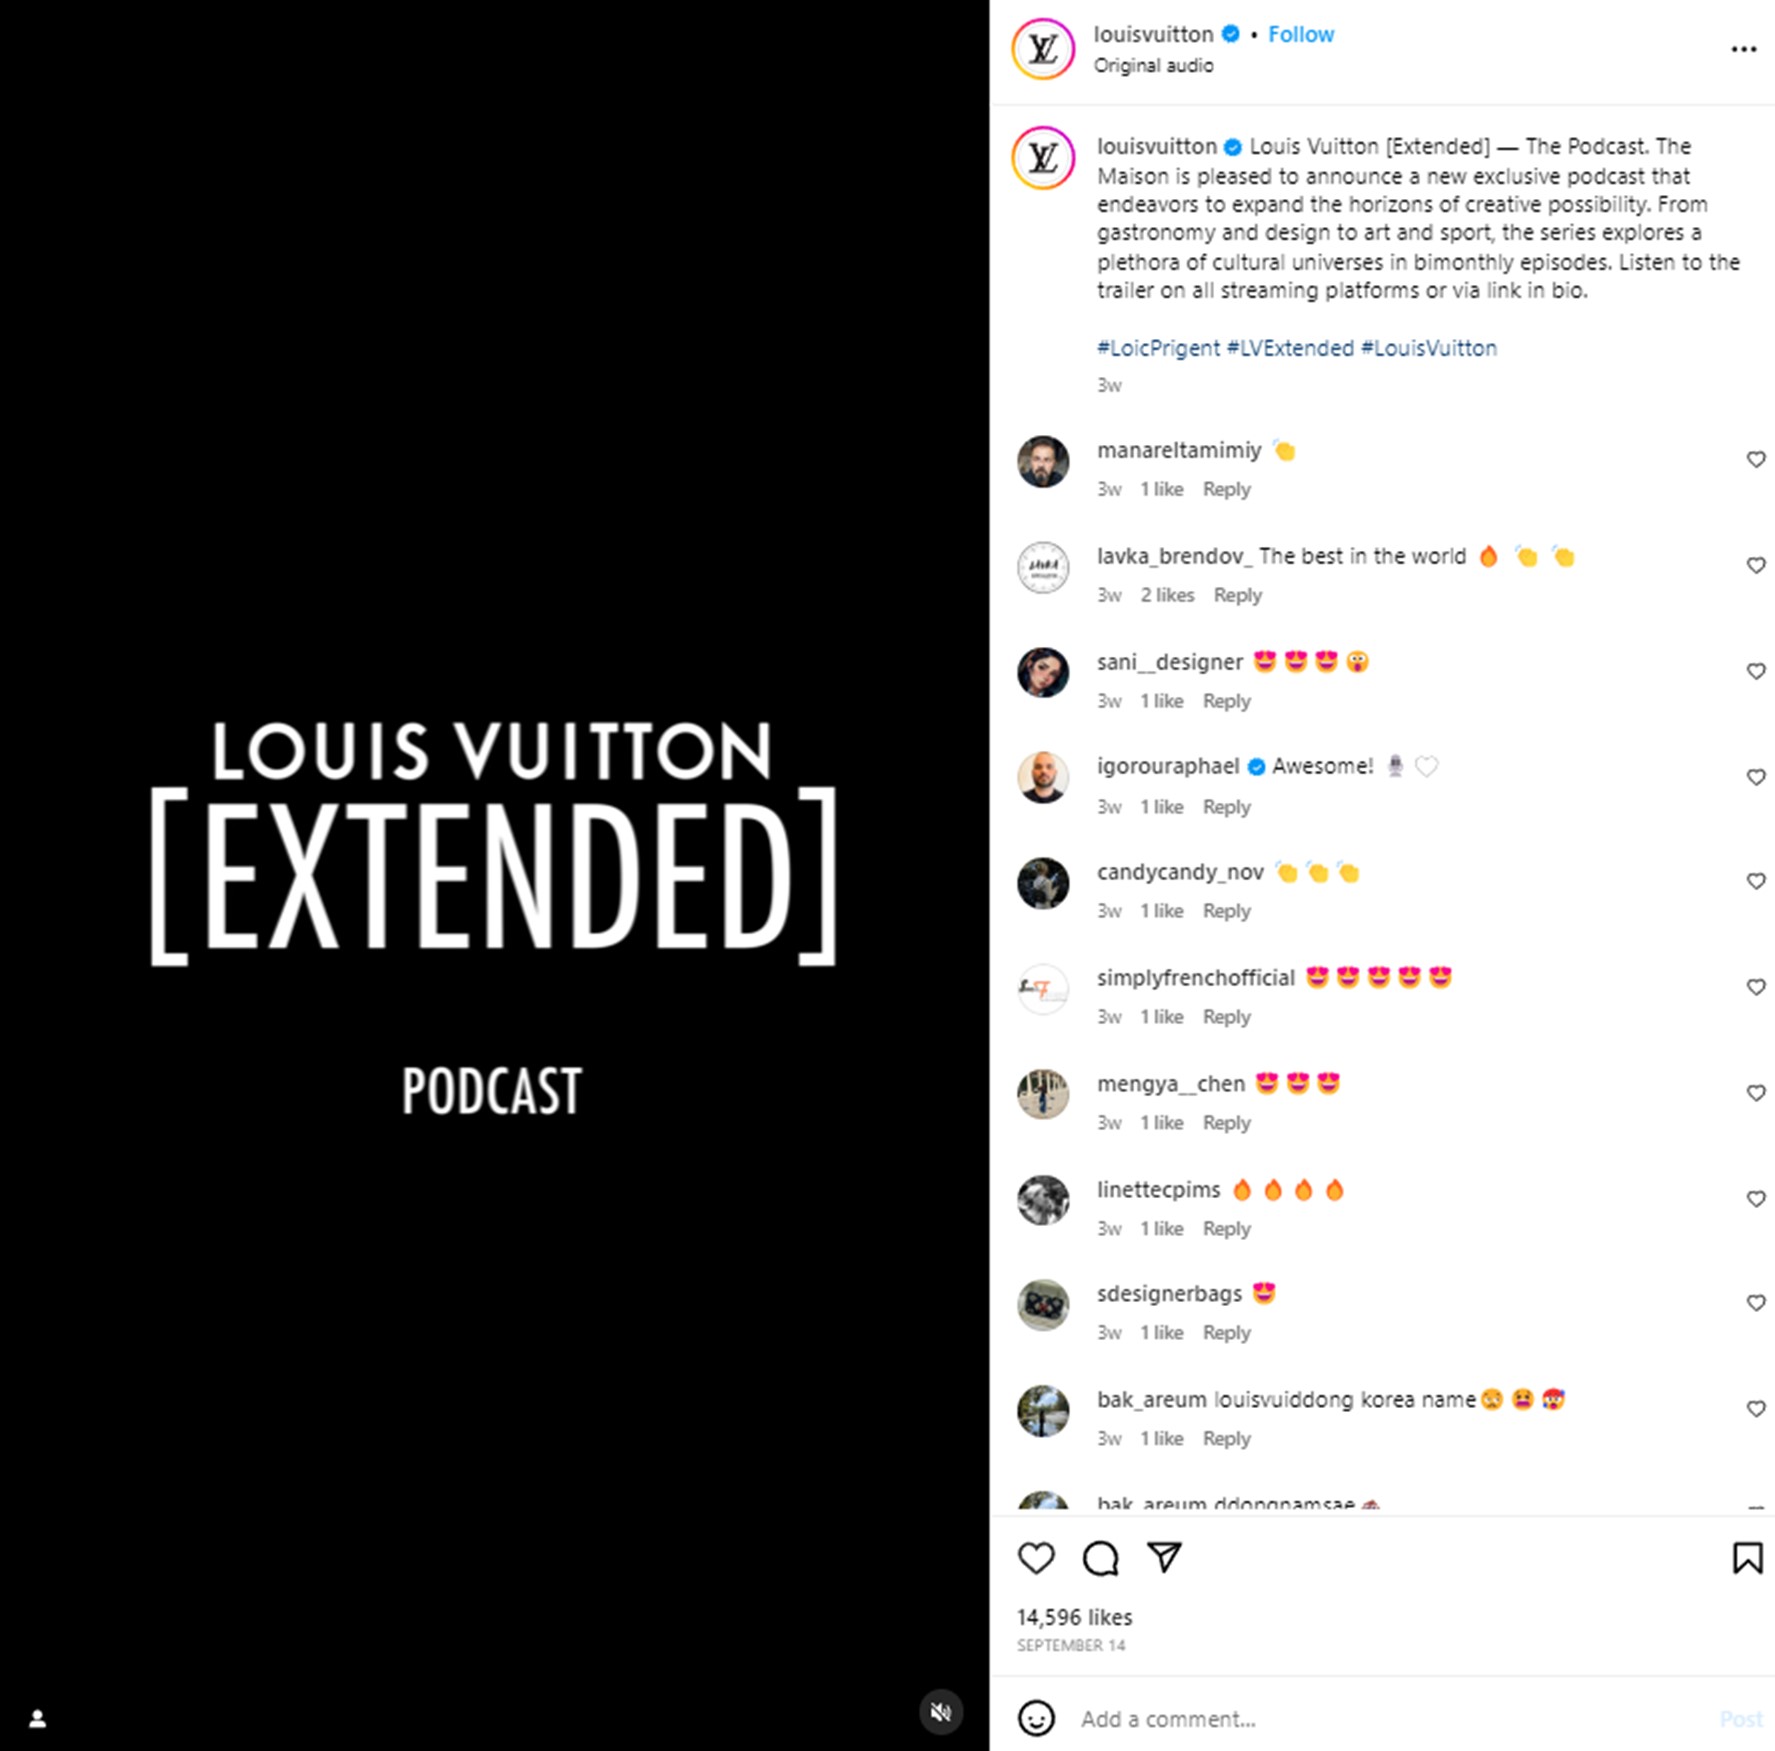 The Louis Vuitton podcast Instagram screenshot